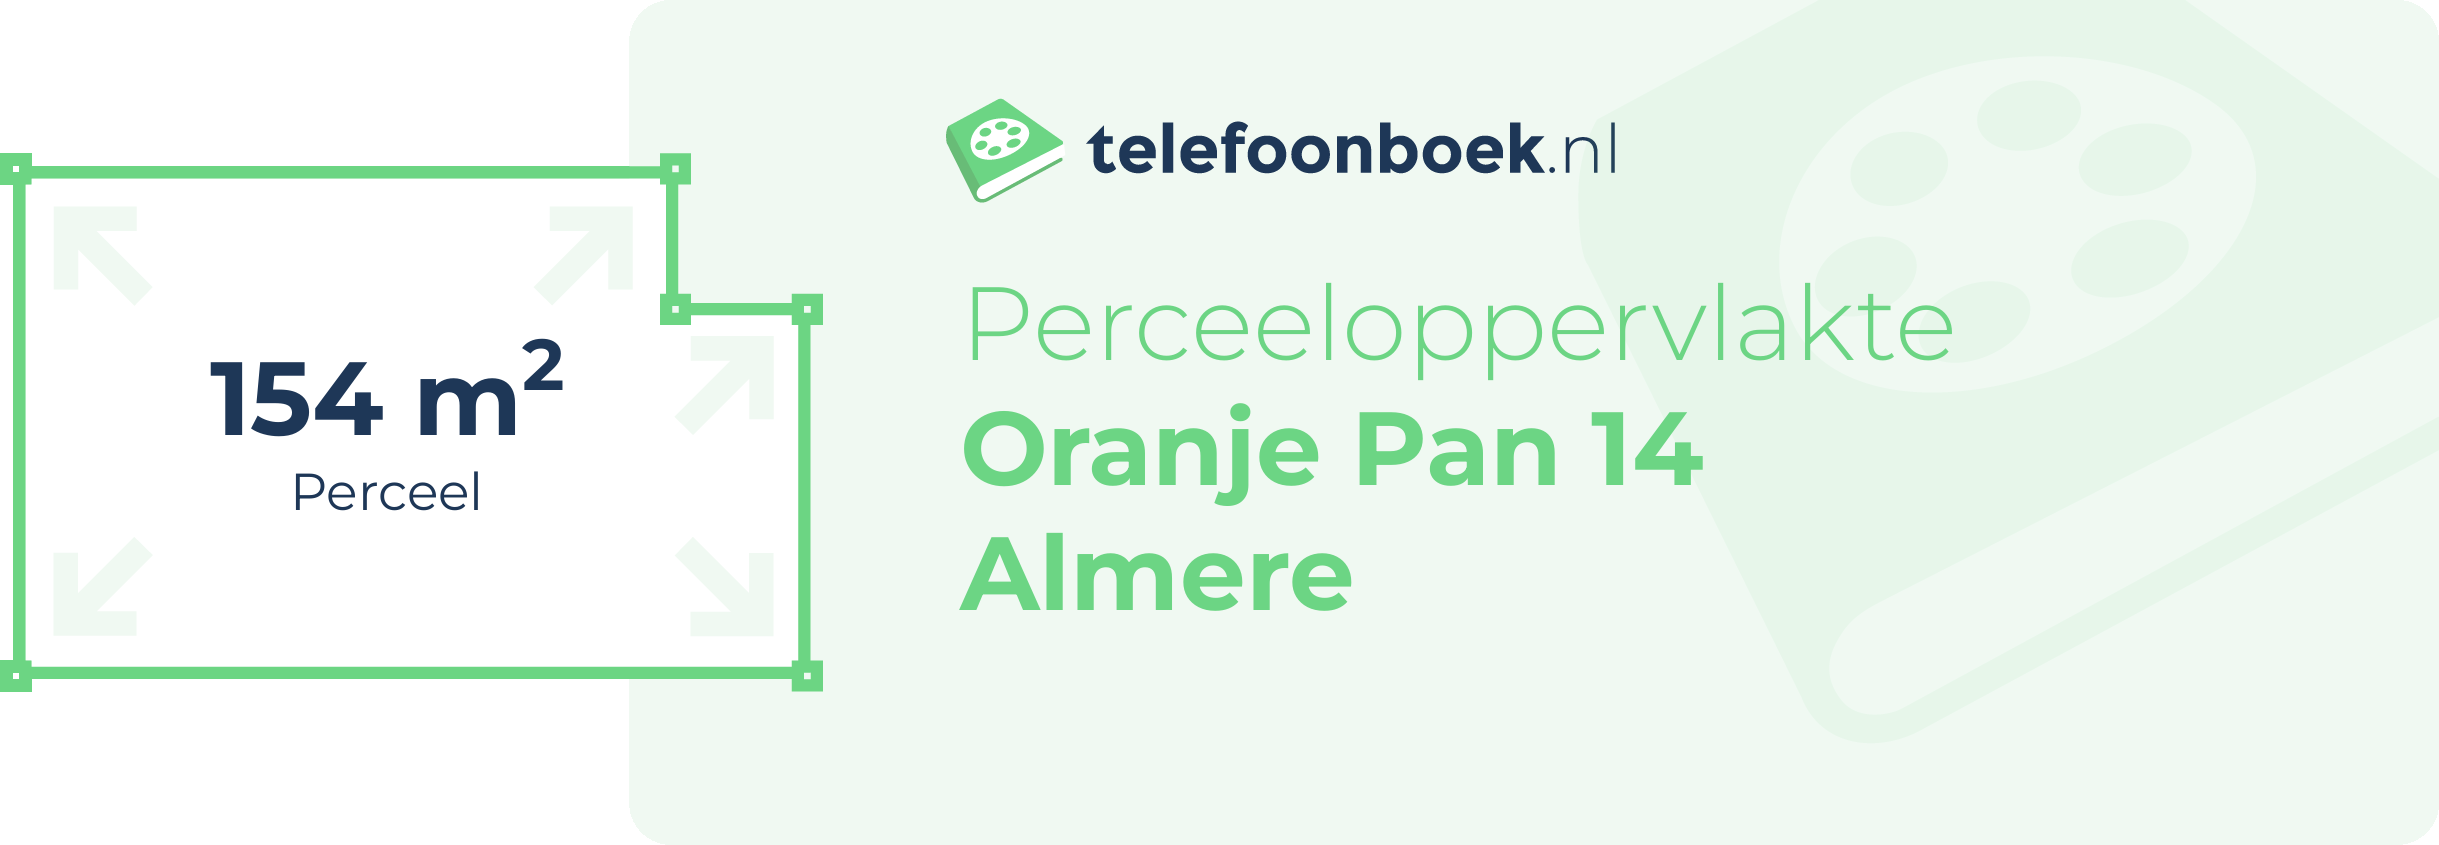 Perceeloppervlakte Oranje Pan 14 Almere